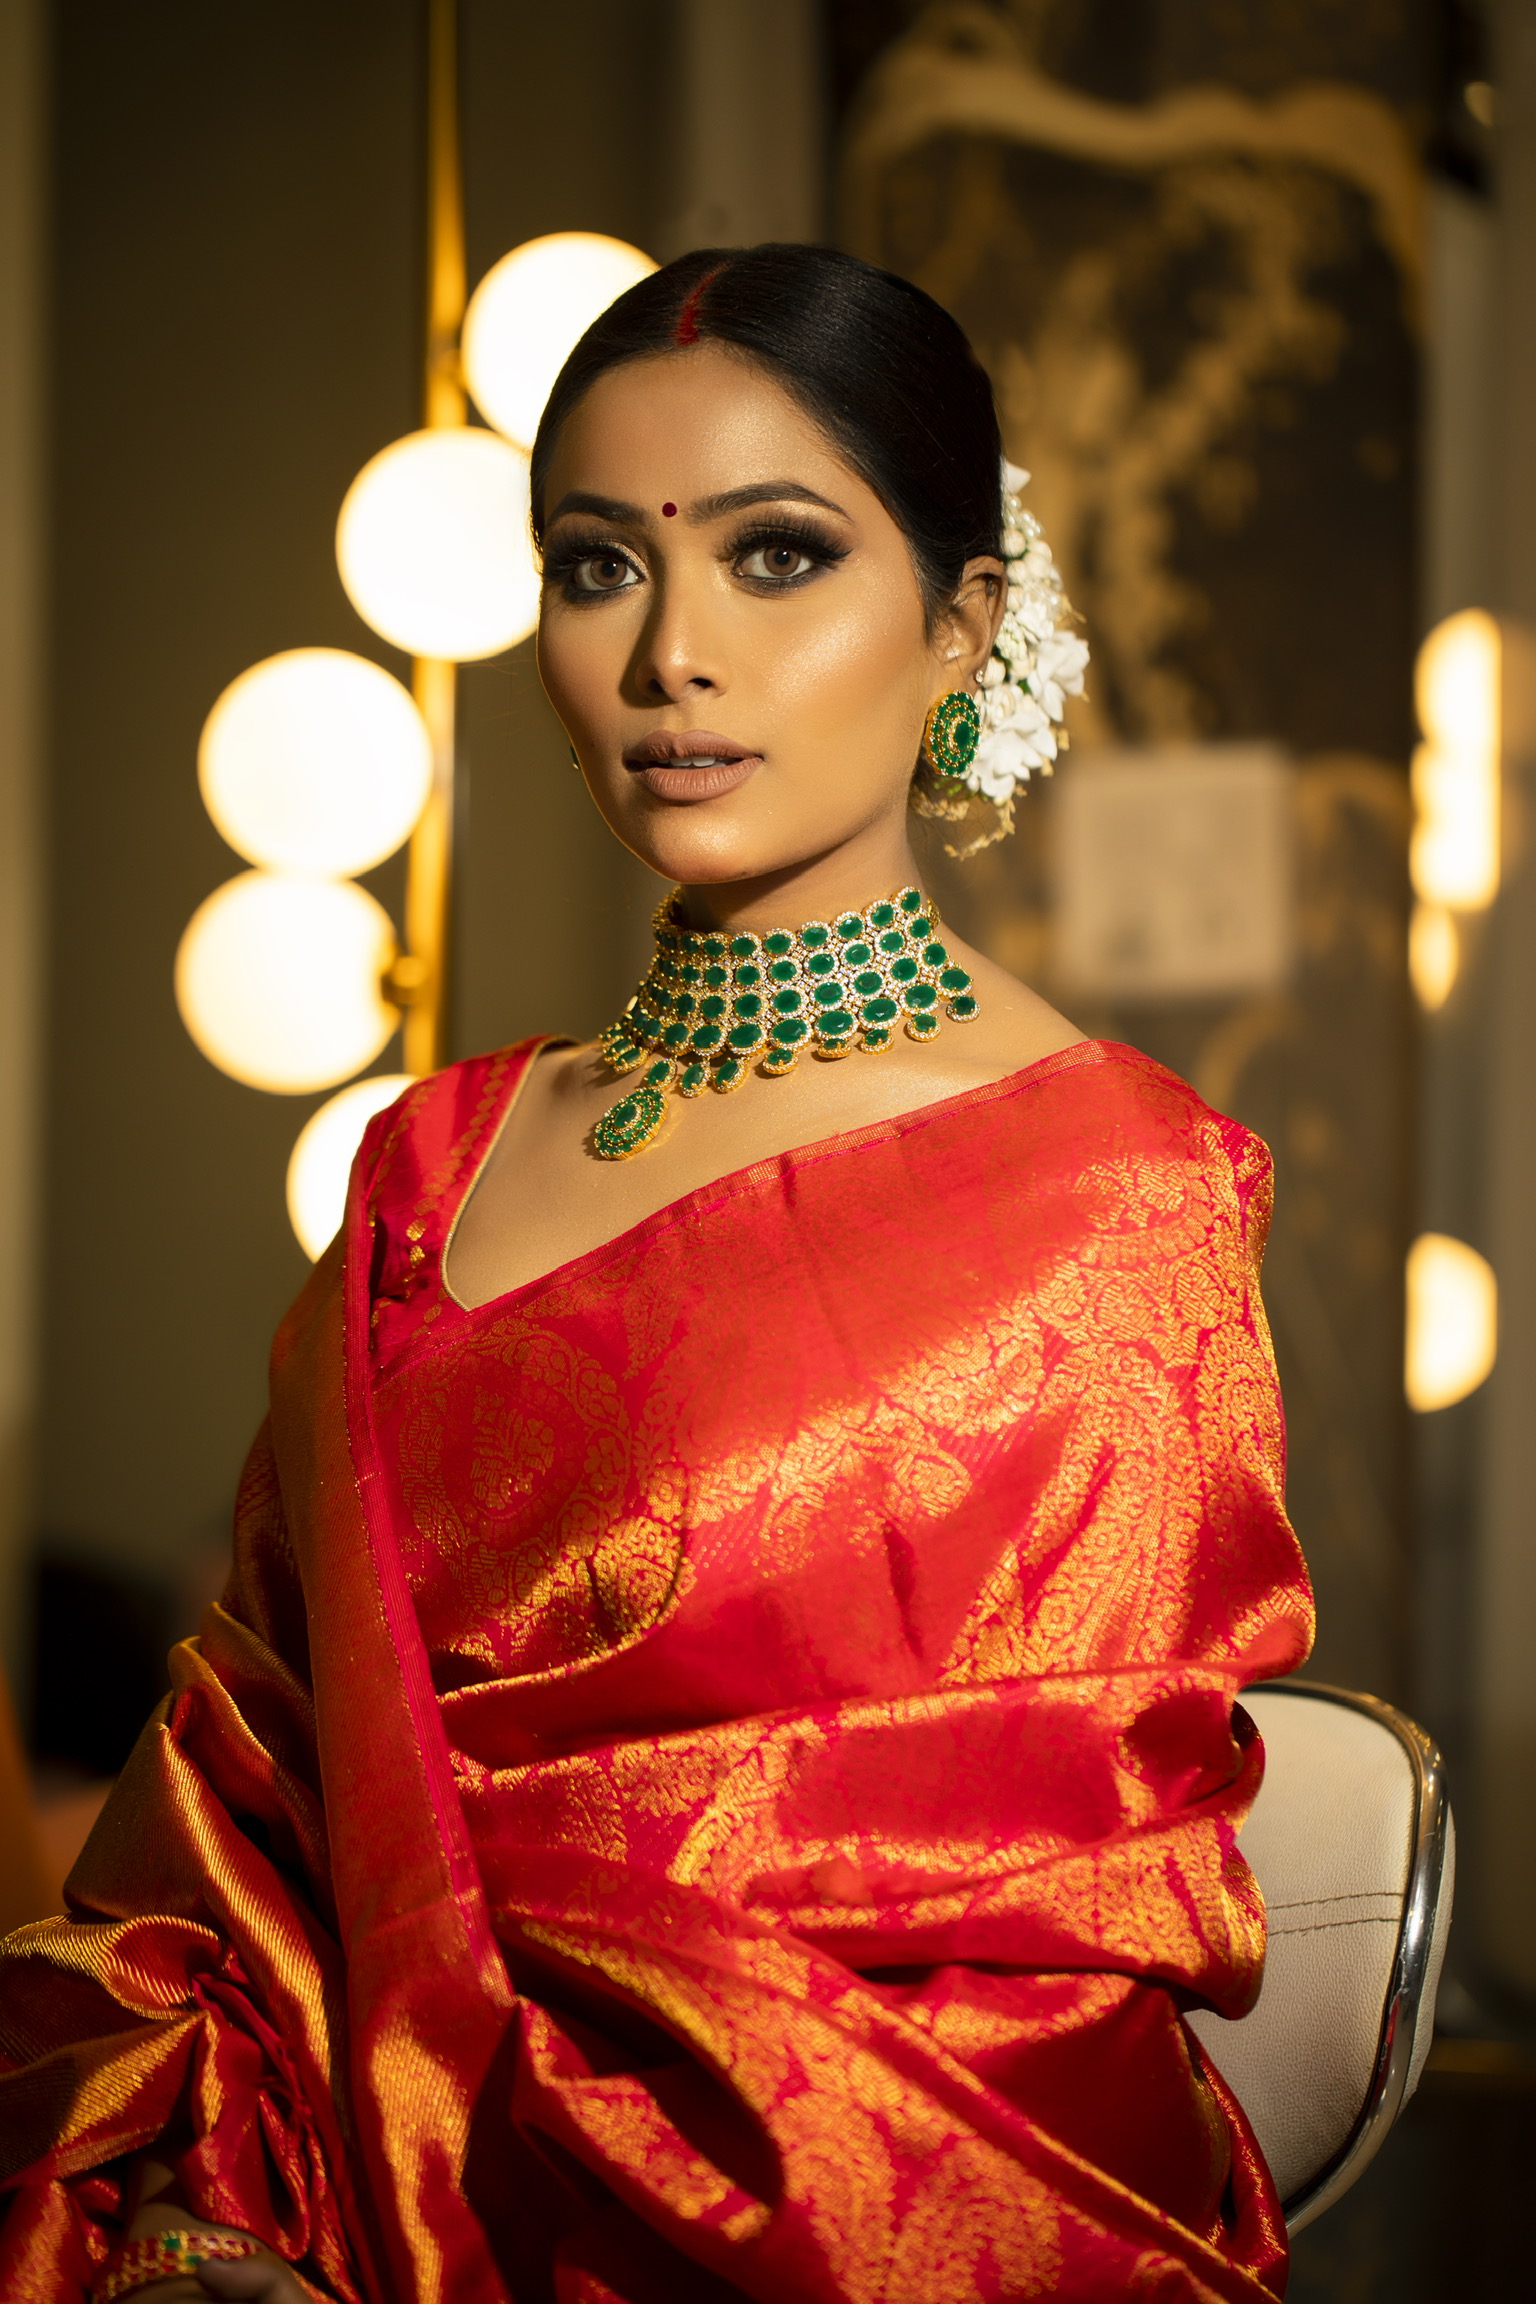 arpita-nirmal-makeup-artist-bangalore